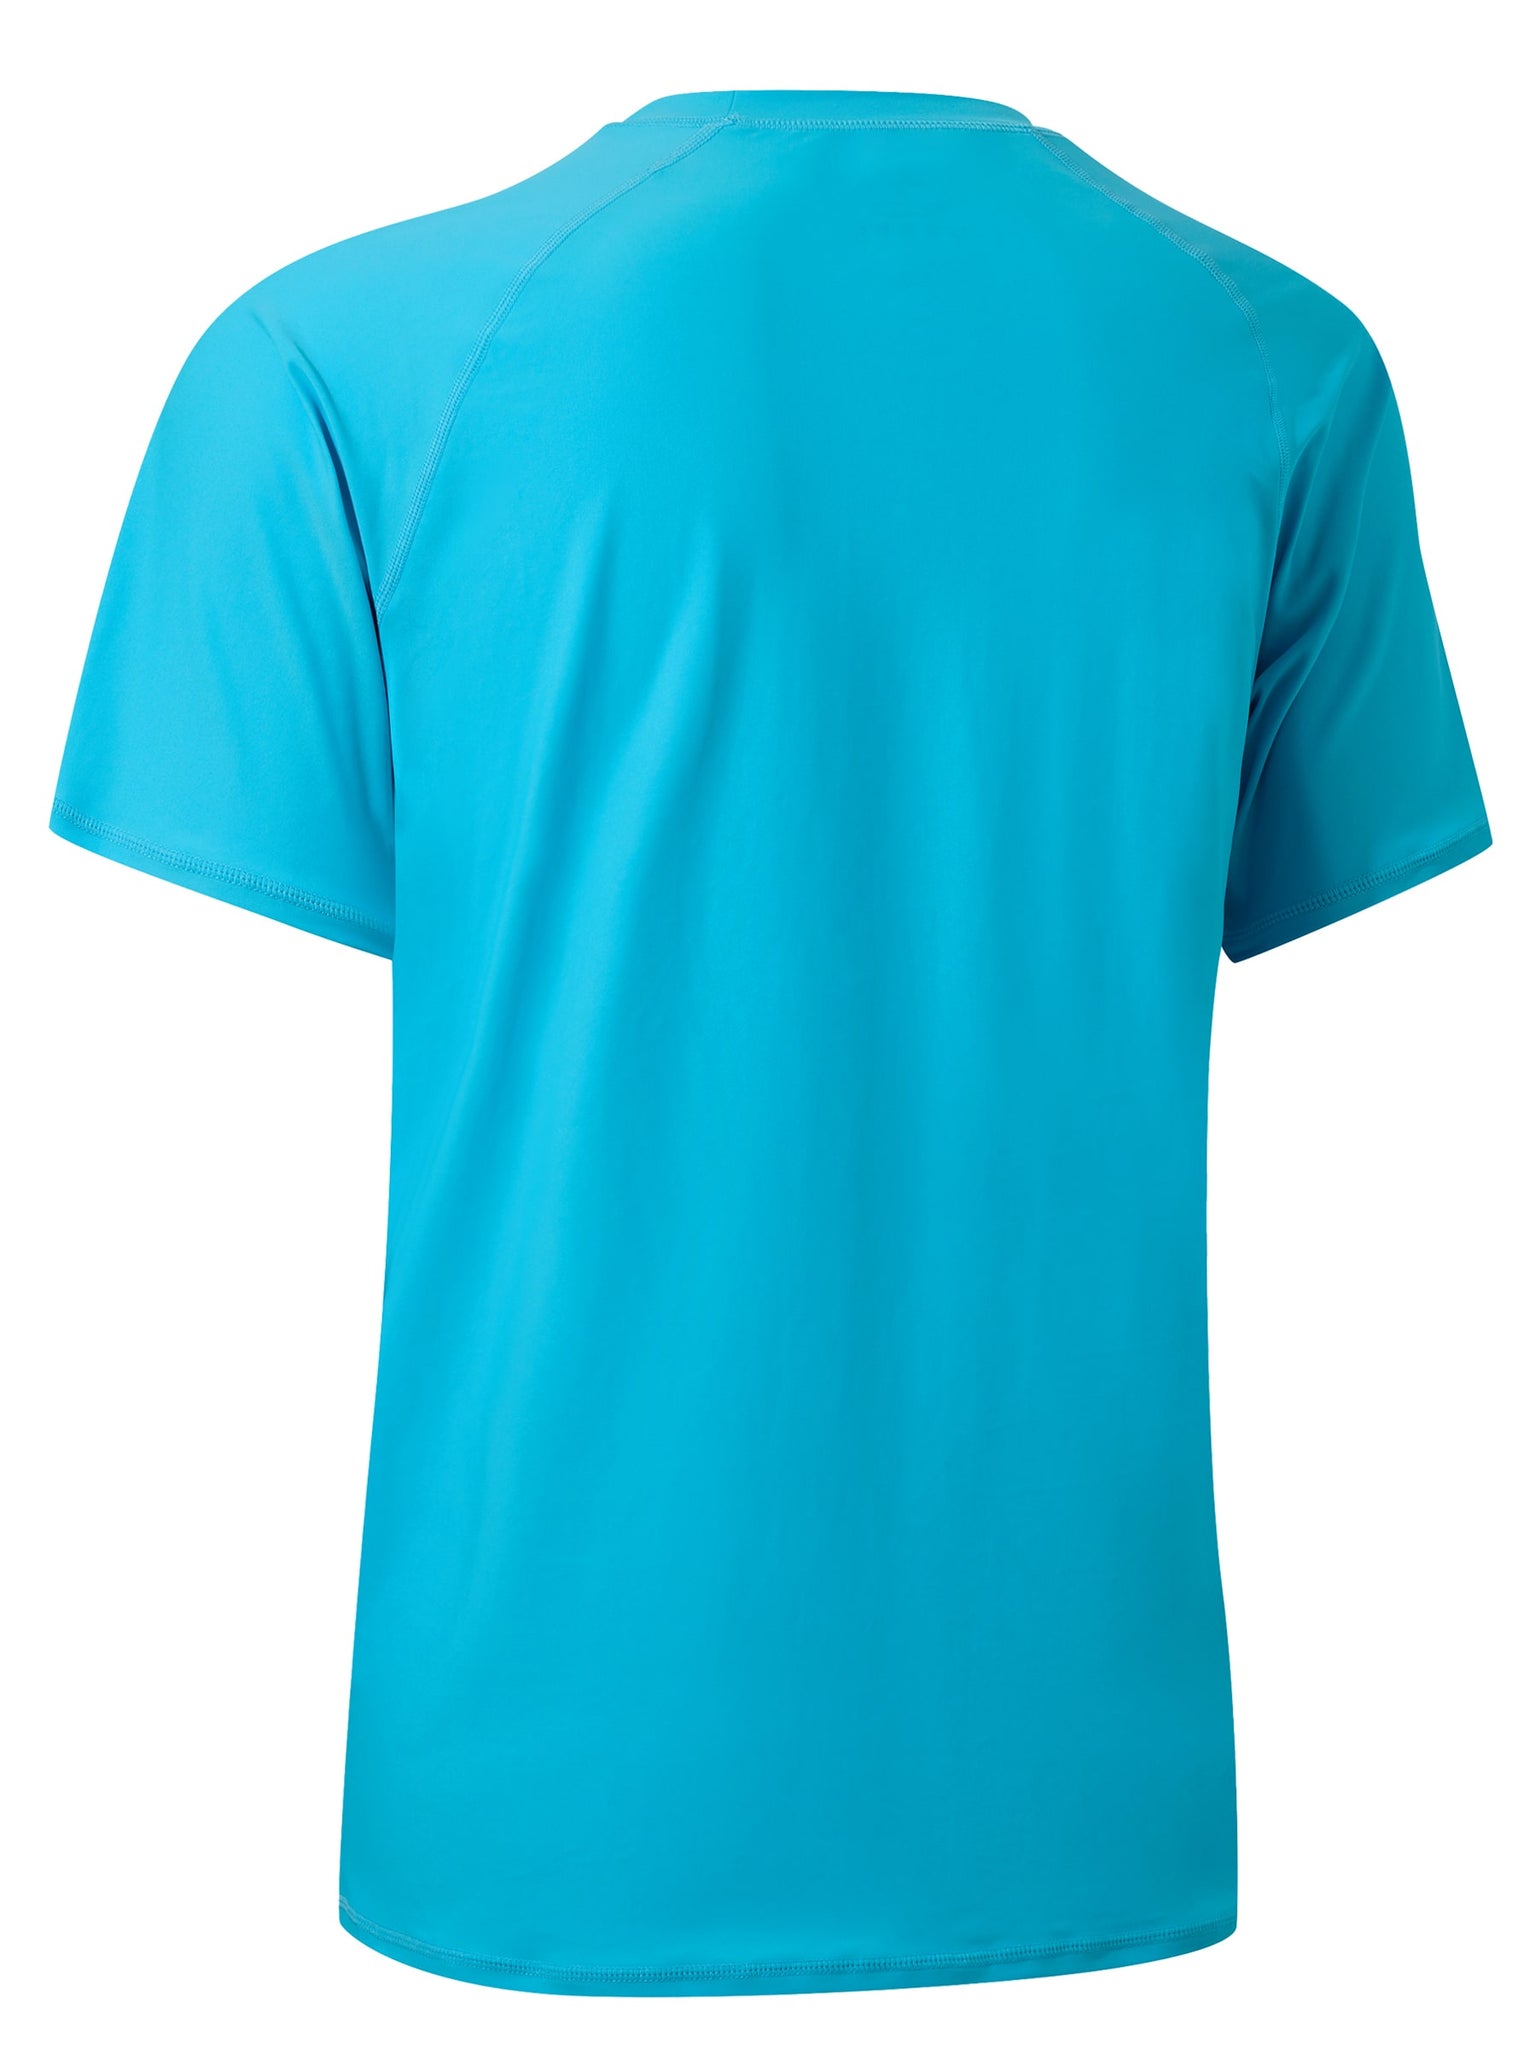 Men's Sun Protection Short Sleeve Shirt_Blue_laydown2